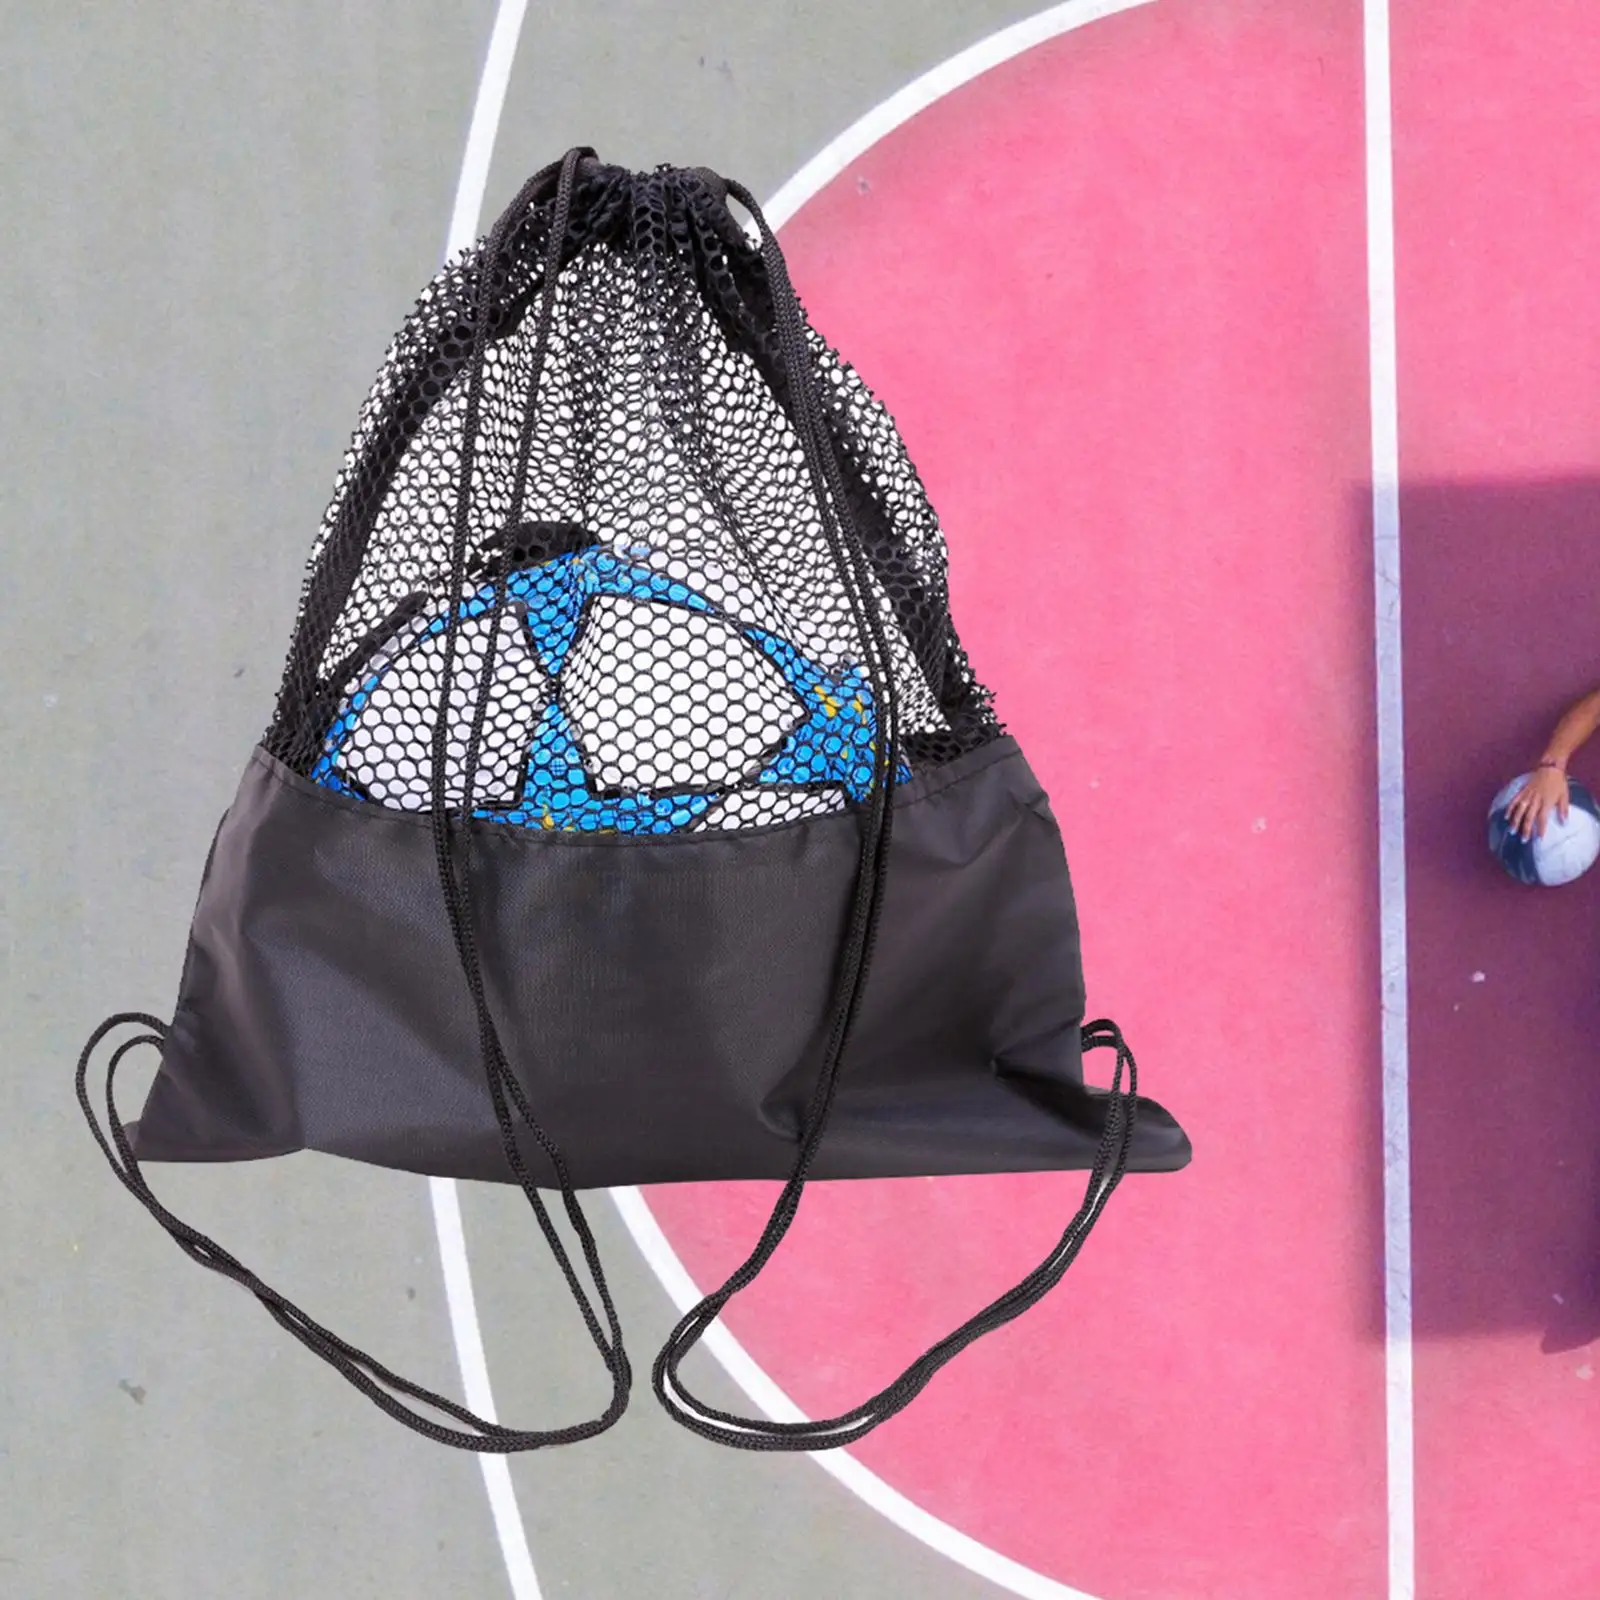 Drawstring Backpack Durable Oxford Cloth Gym Bag Black Portable Basketball Mesh Bag for Football Swimming Travel Rugby Softball